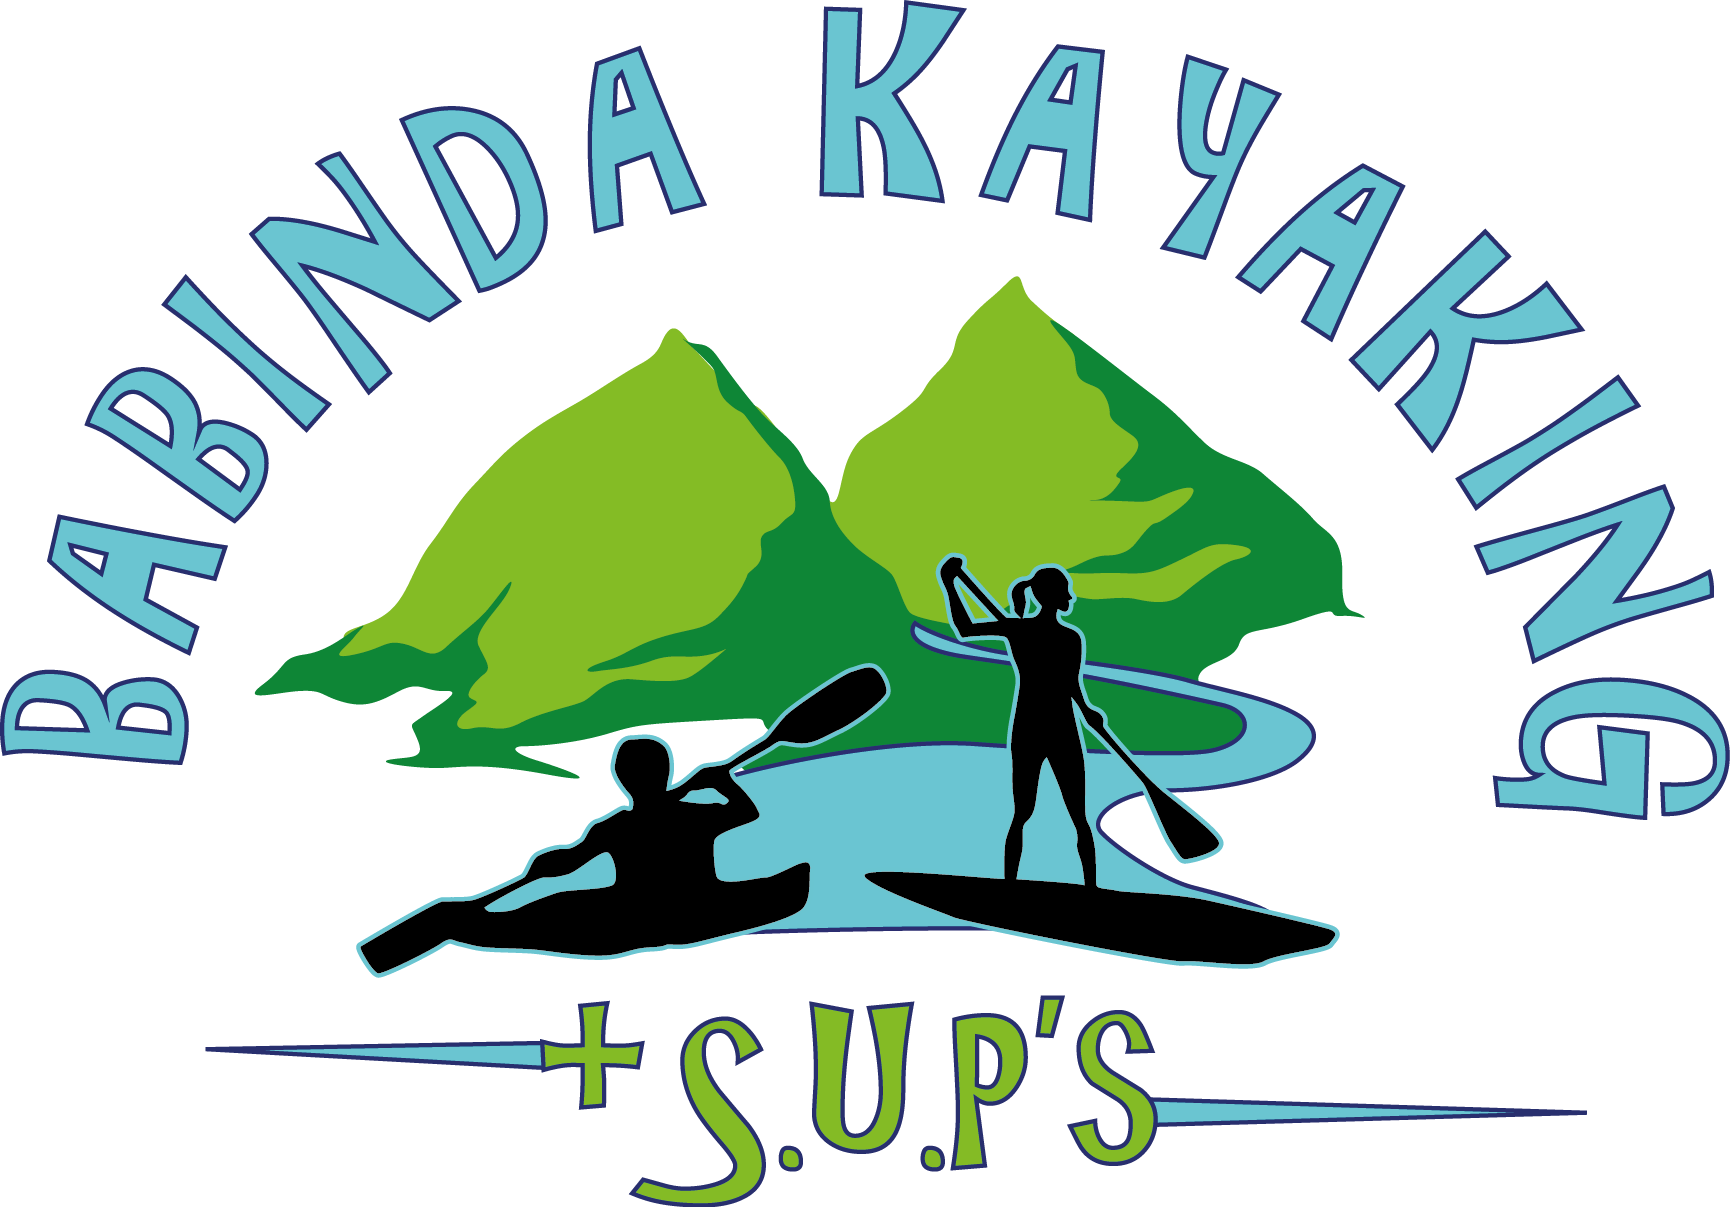 Kayaking clipart illustration. Babinda